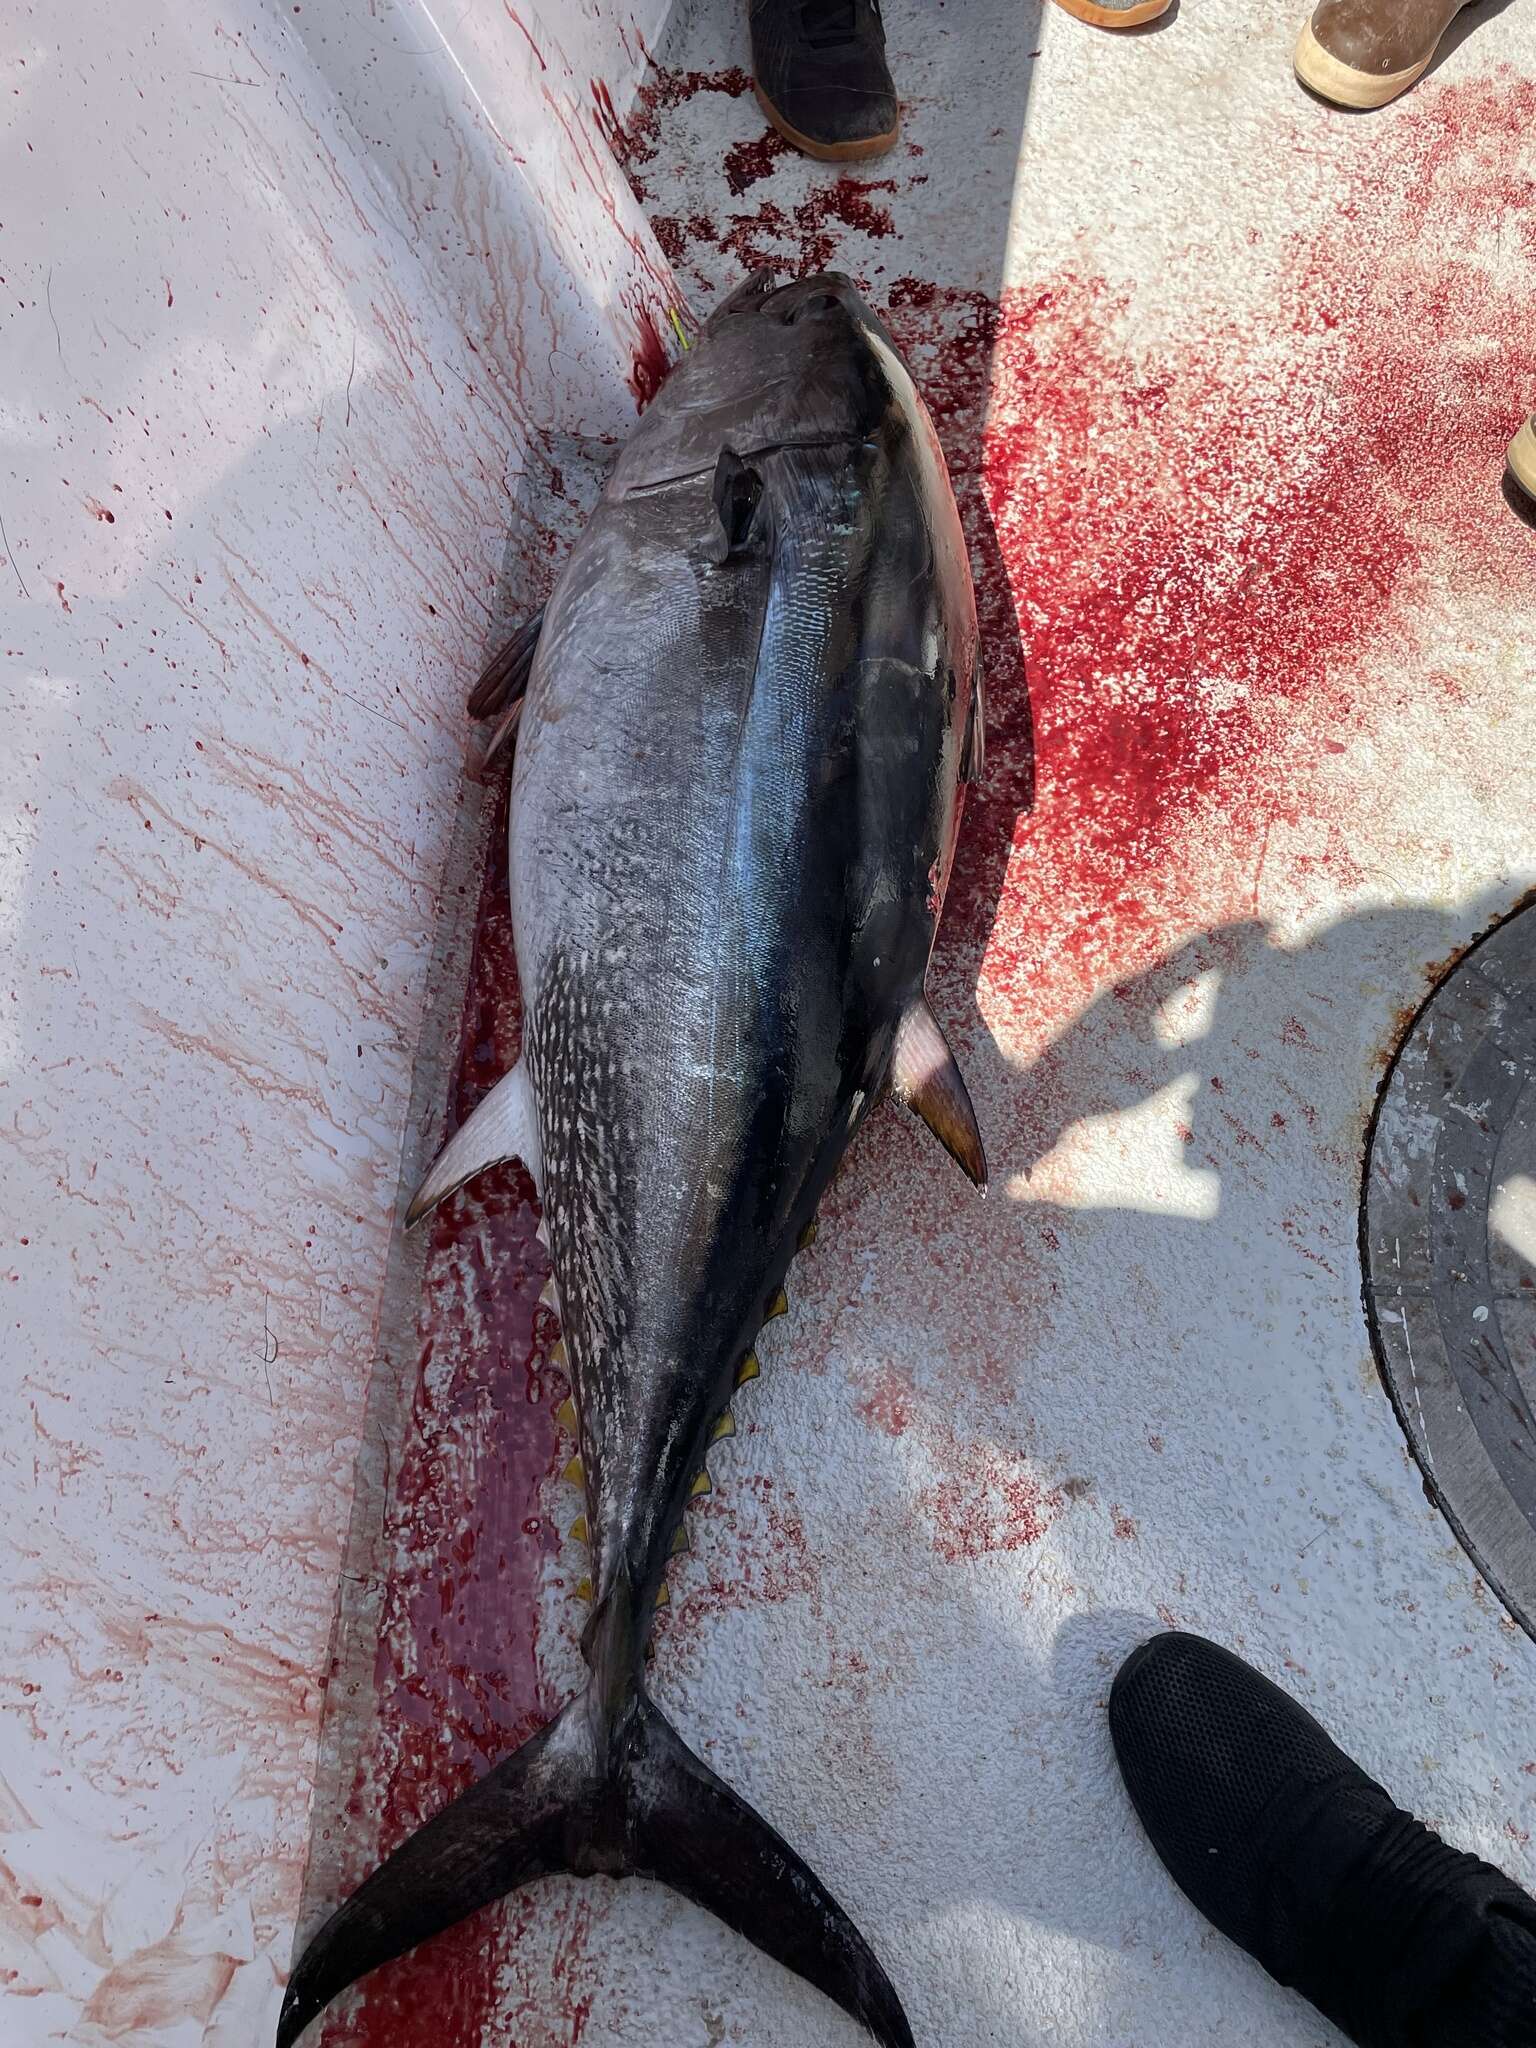 Image of Pacific Bluefin Tuna